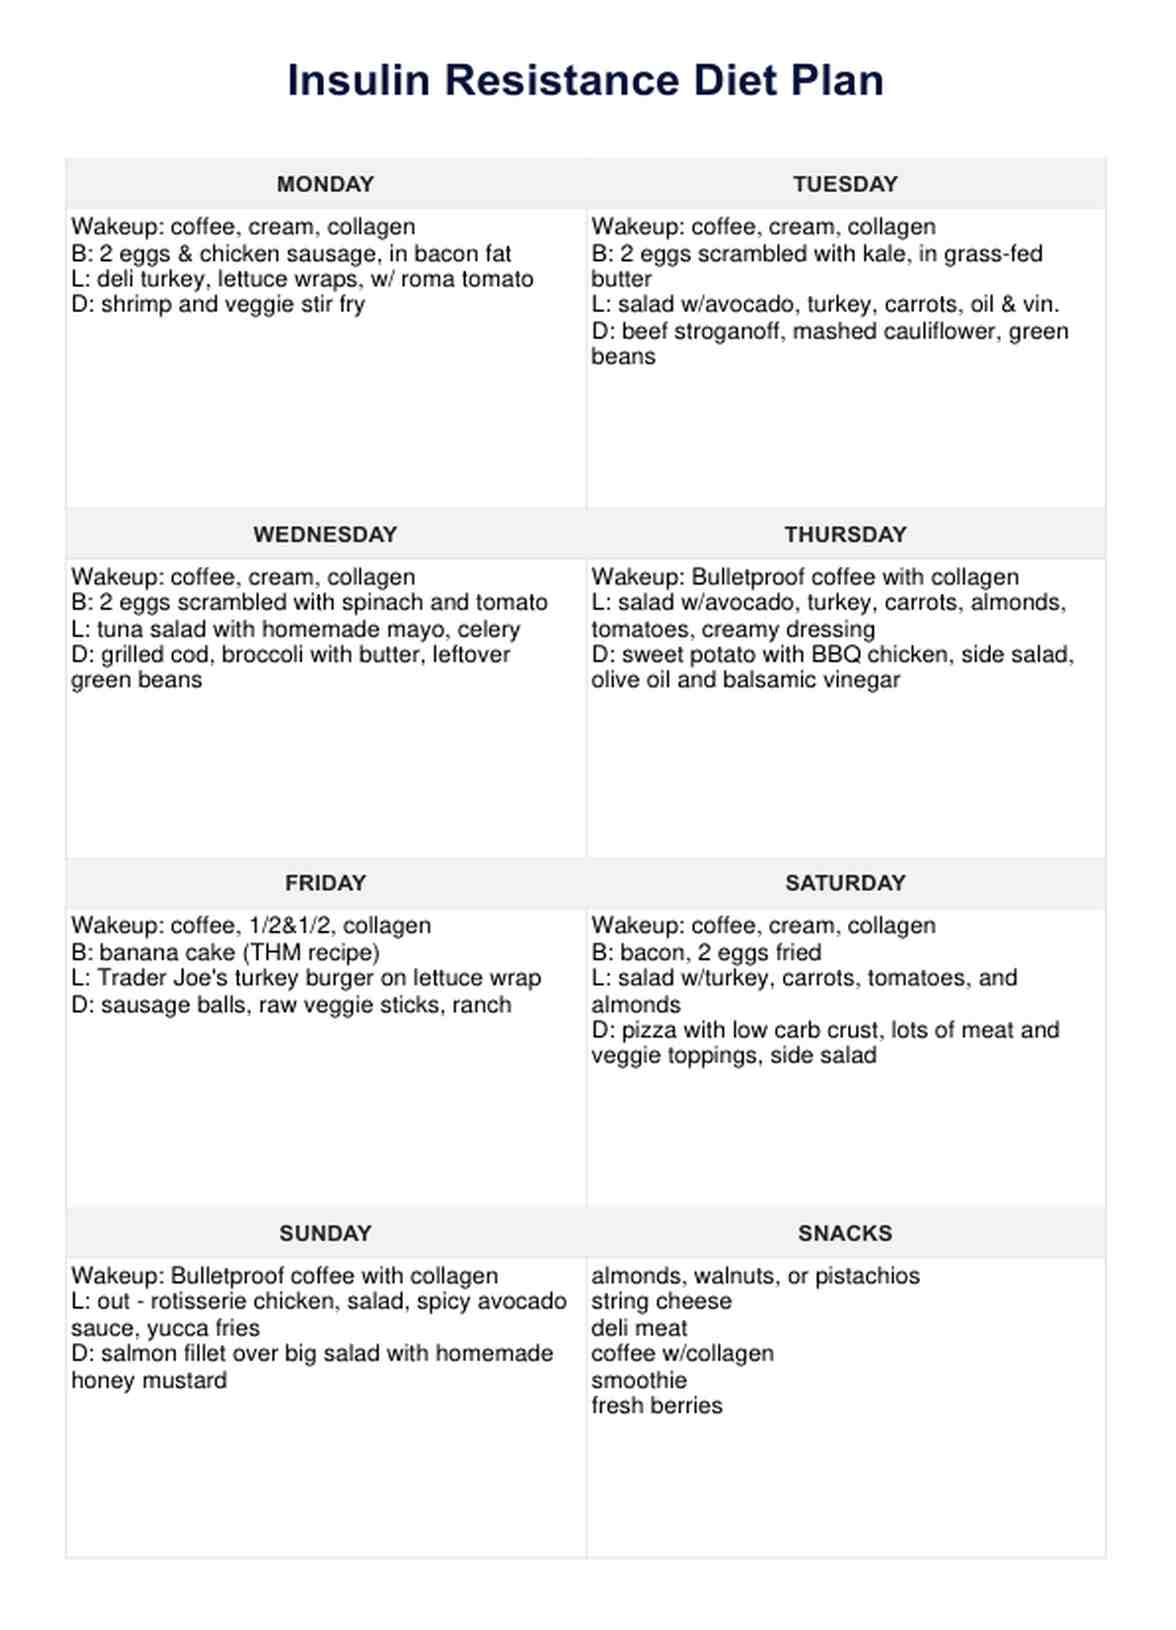 Insulin Resistance Diet Plan PDF PDF Example